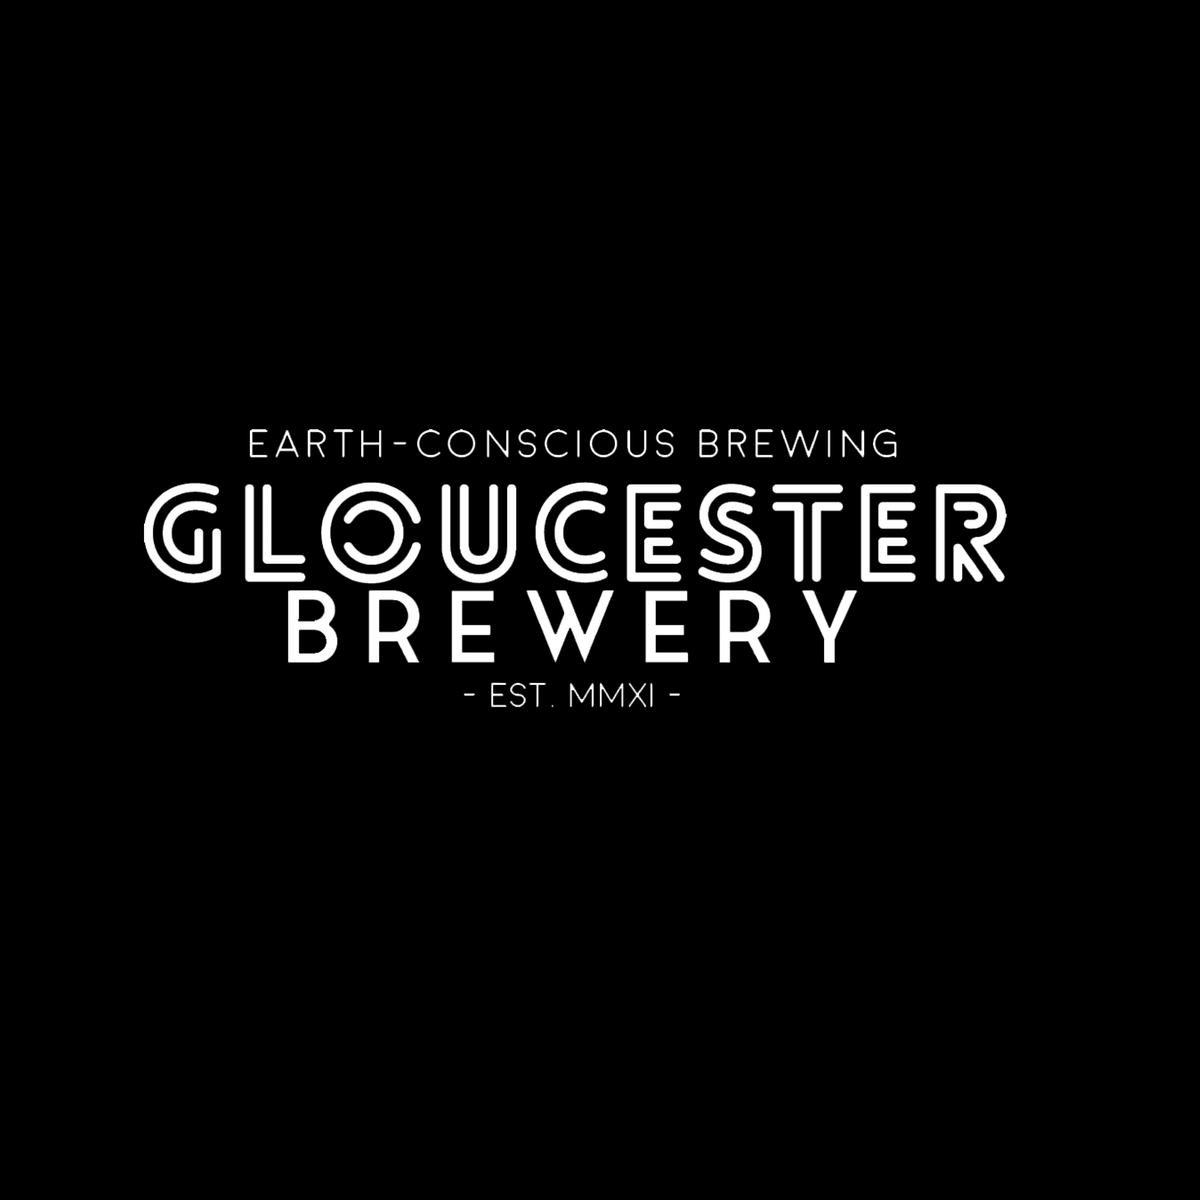 Gloucester Brewery brand logo